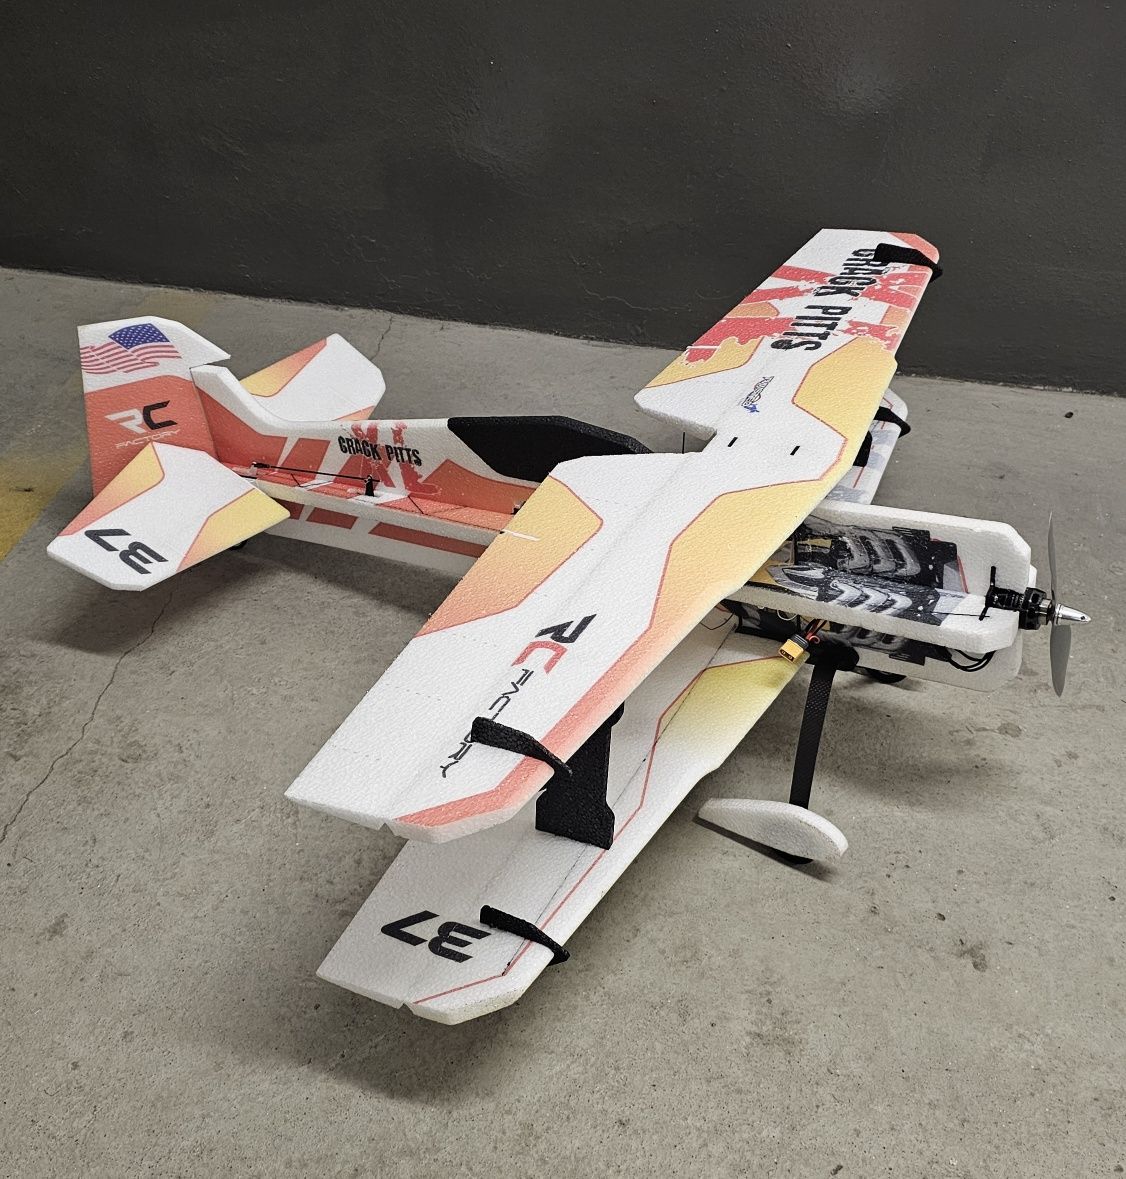 Model samolot 3D RC Factory Crack Pitts gotowy  T-Motor